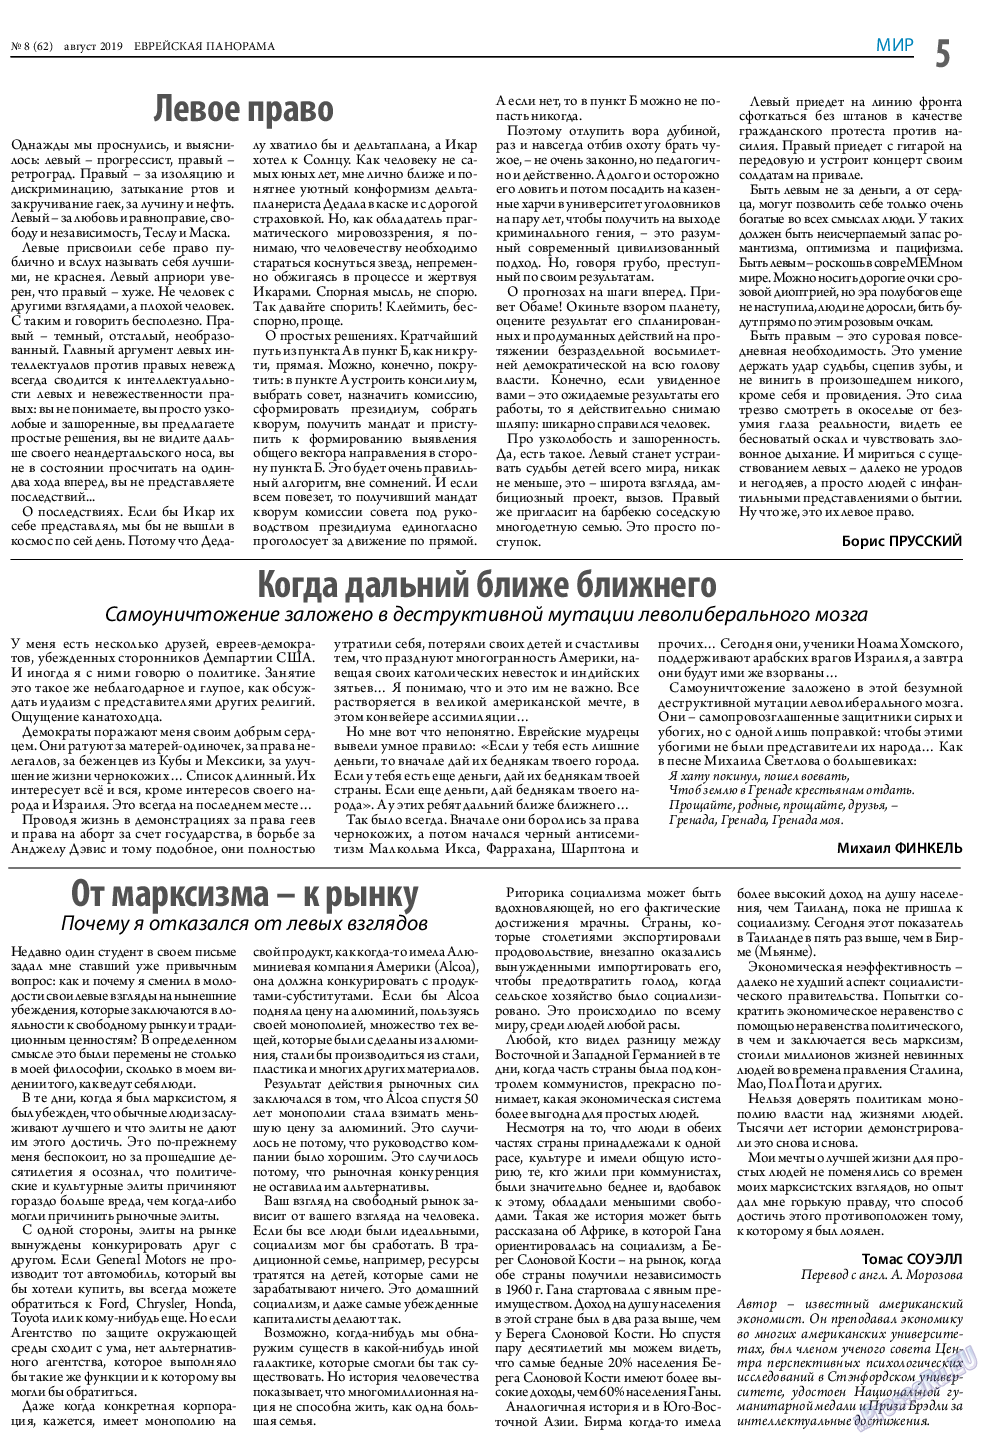 Еврейская панорама, газета. 2019 №8 стр.5